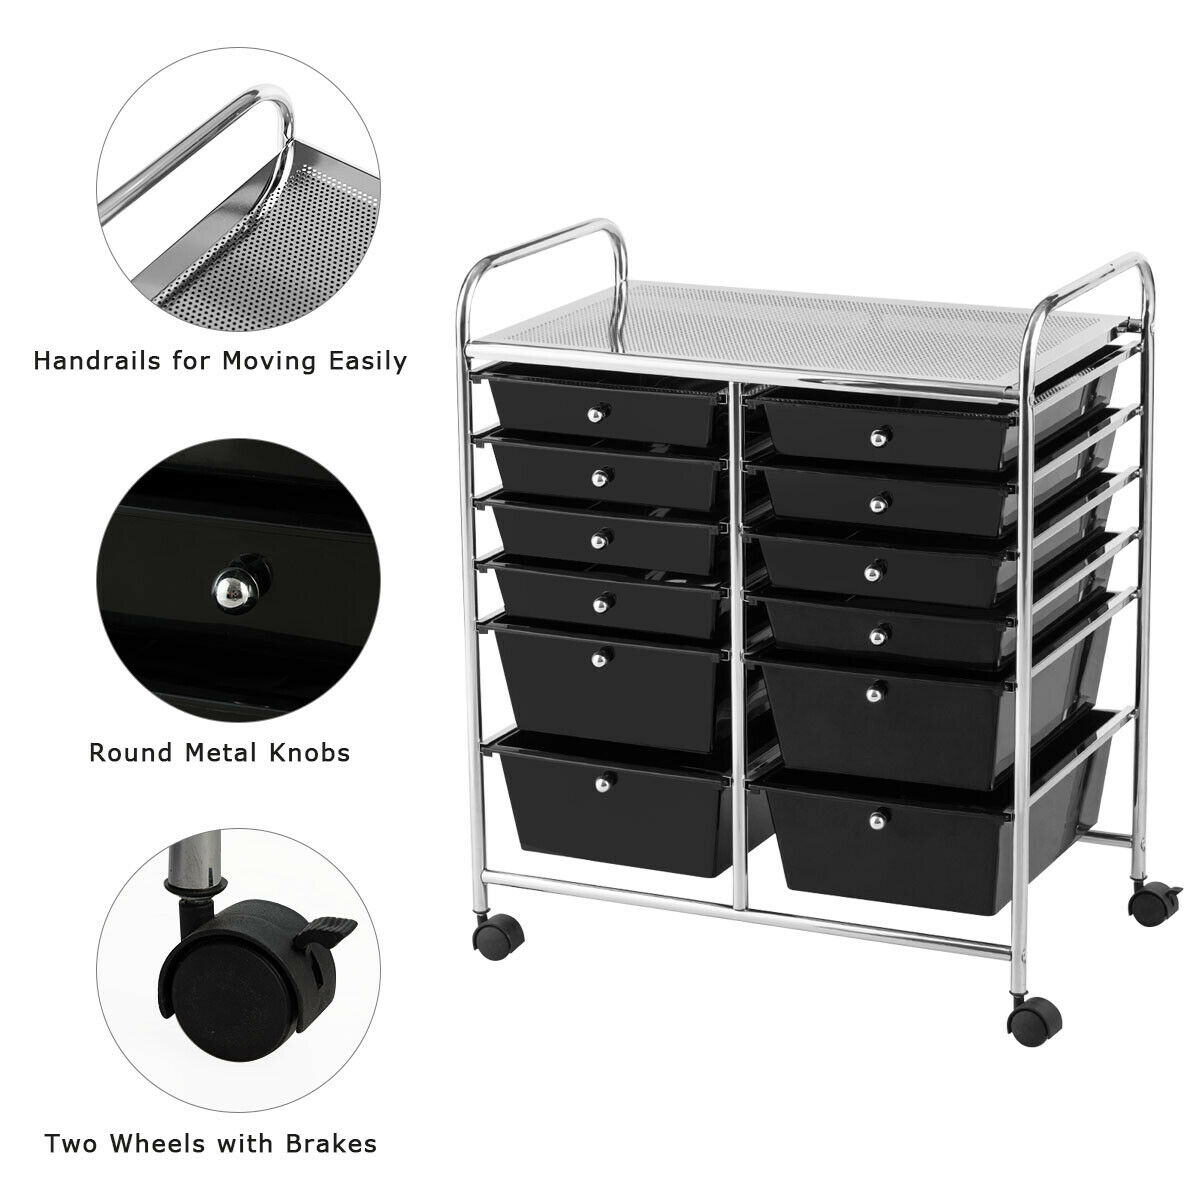 Black 5-Drawer Rolling Storage Bin